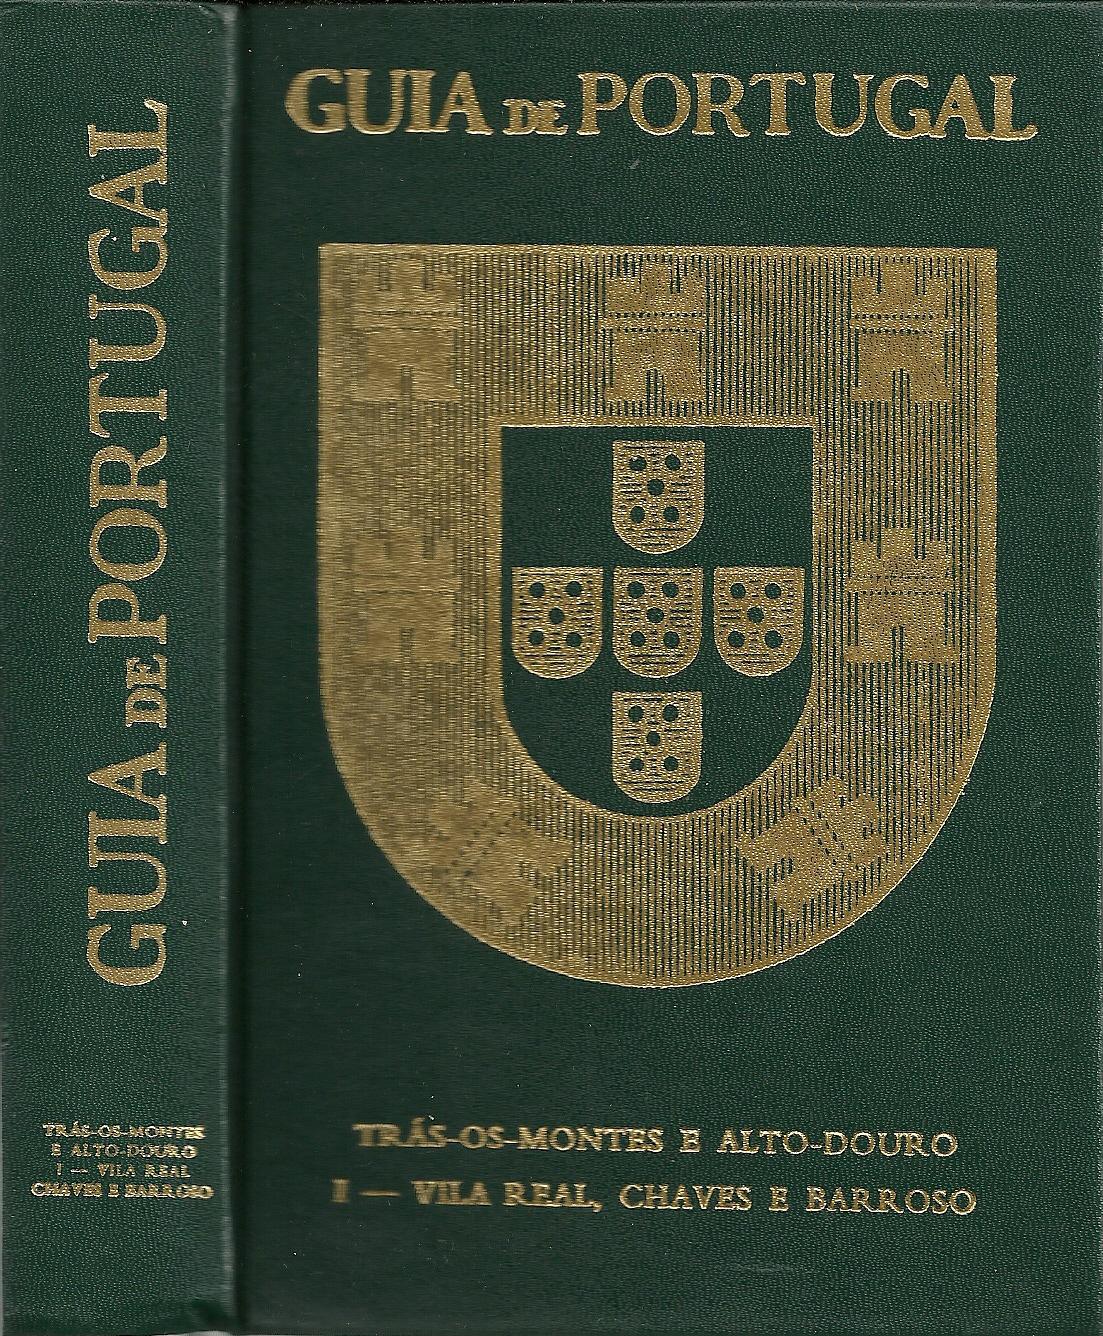 GUIA DE PORTUGAL TRÁS-OS-MONTES E ALTO-DOURO. I - VILA REAL, CHAVES E BARROSO. - Vv.aa.